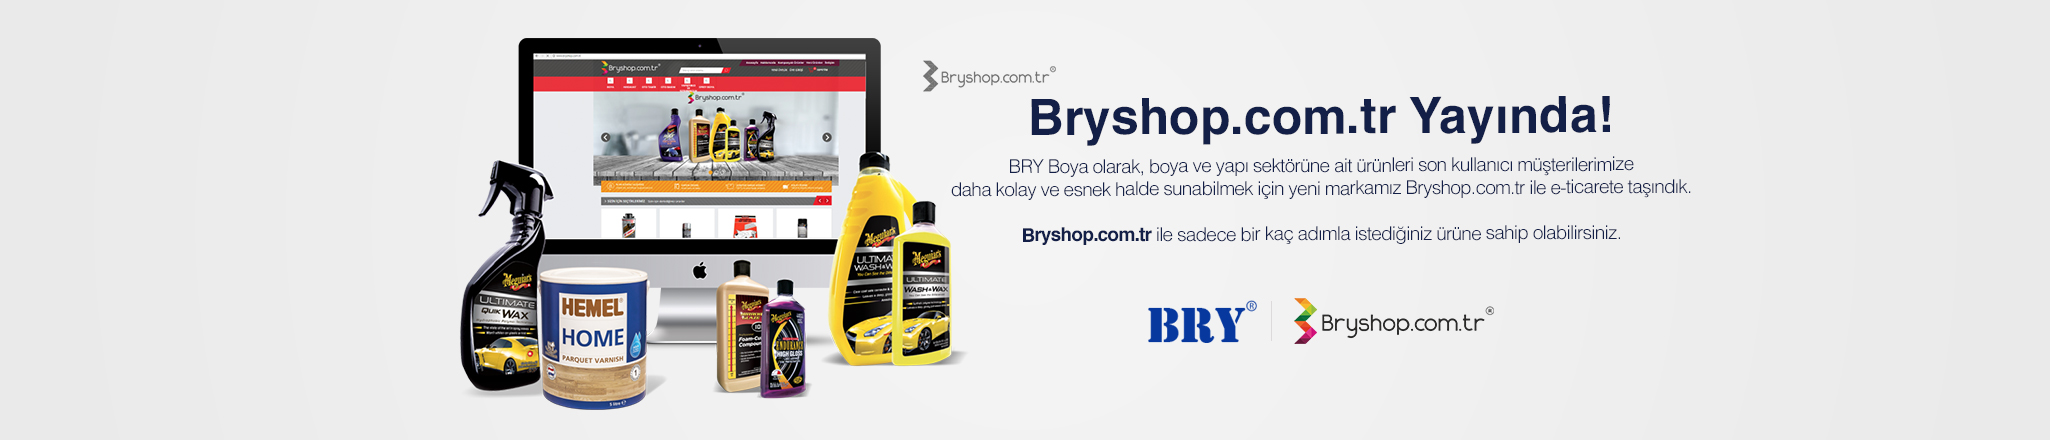 Bryshop.com.tr Yaynda!